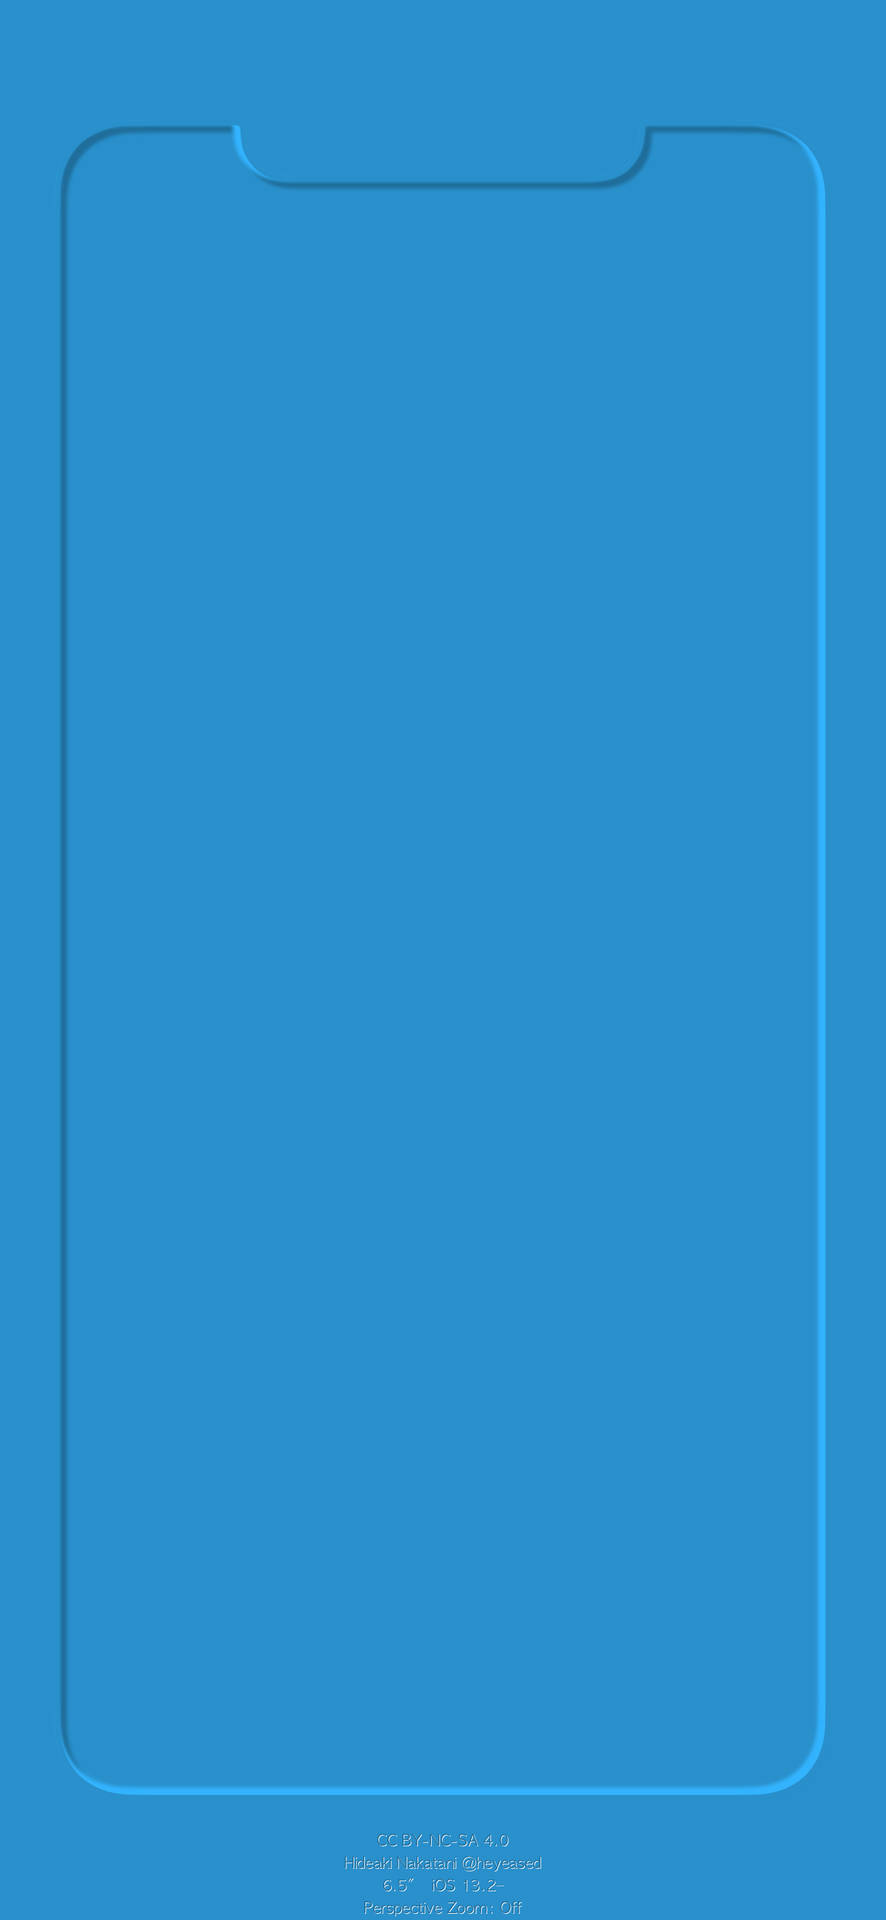 Enblå Fyrkant Med Vit Bakgrund Wallpaper